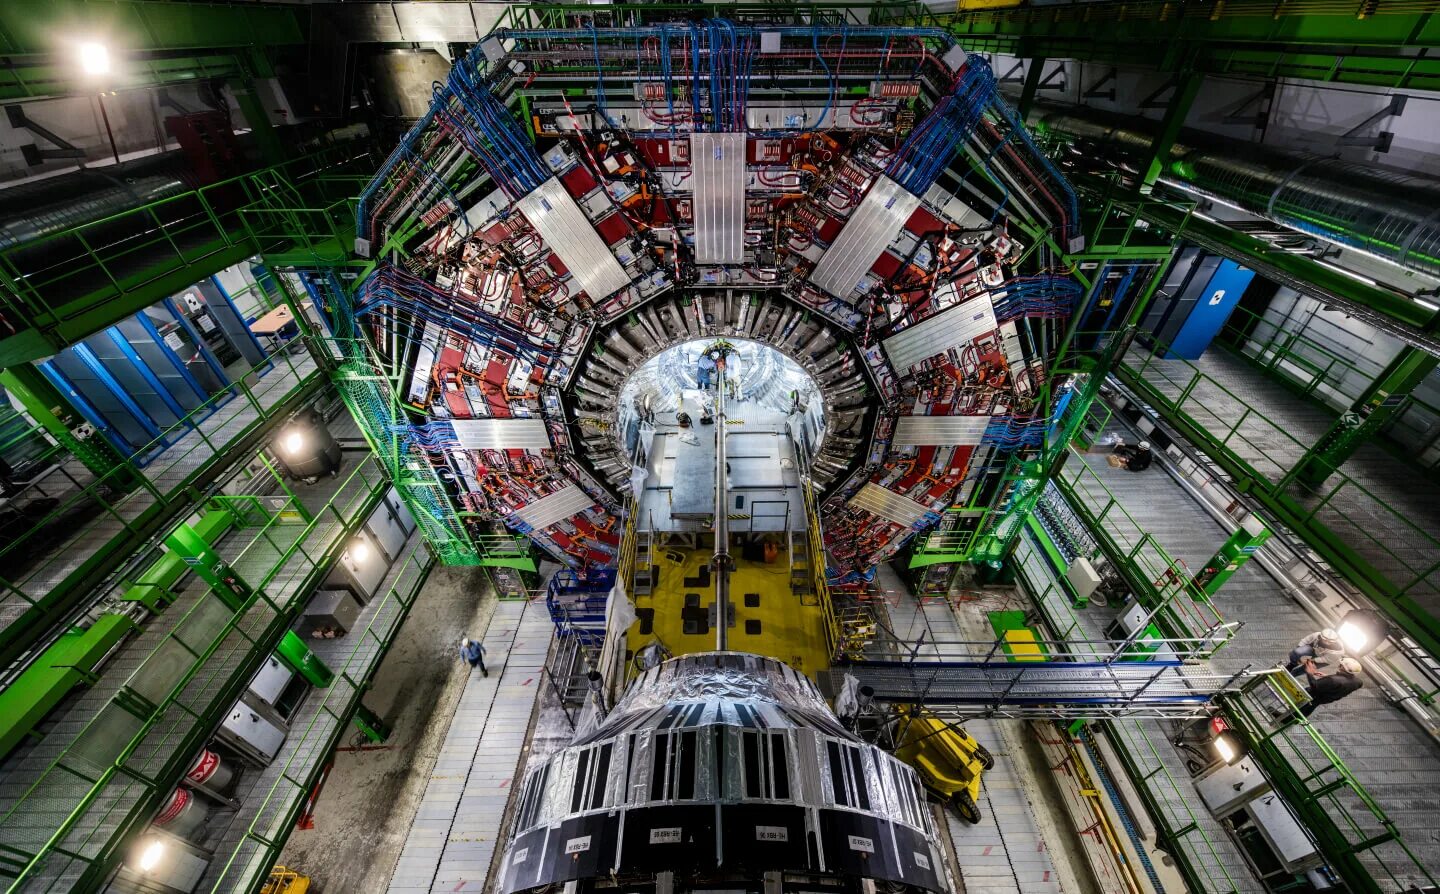 Ускоритель атомных частиц. Швейцария ЦЕРН коллайдер. Адронный коллайдер ЦЕРН. Большой адронный коллайдер ЦЕРН. Большой адронный коллайдер в Швейцарии.